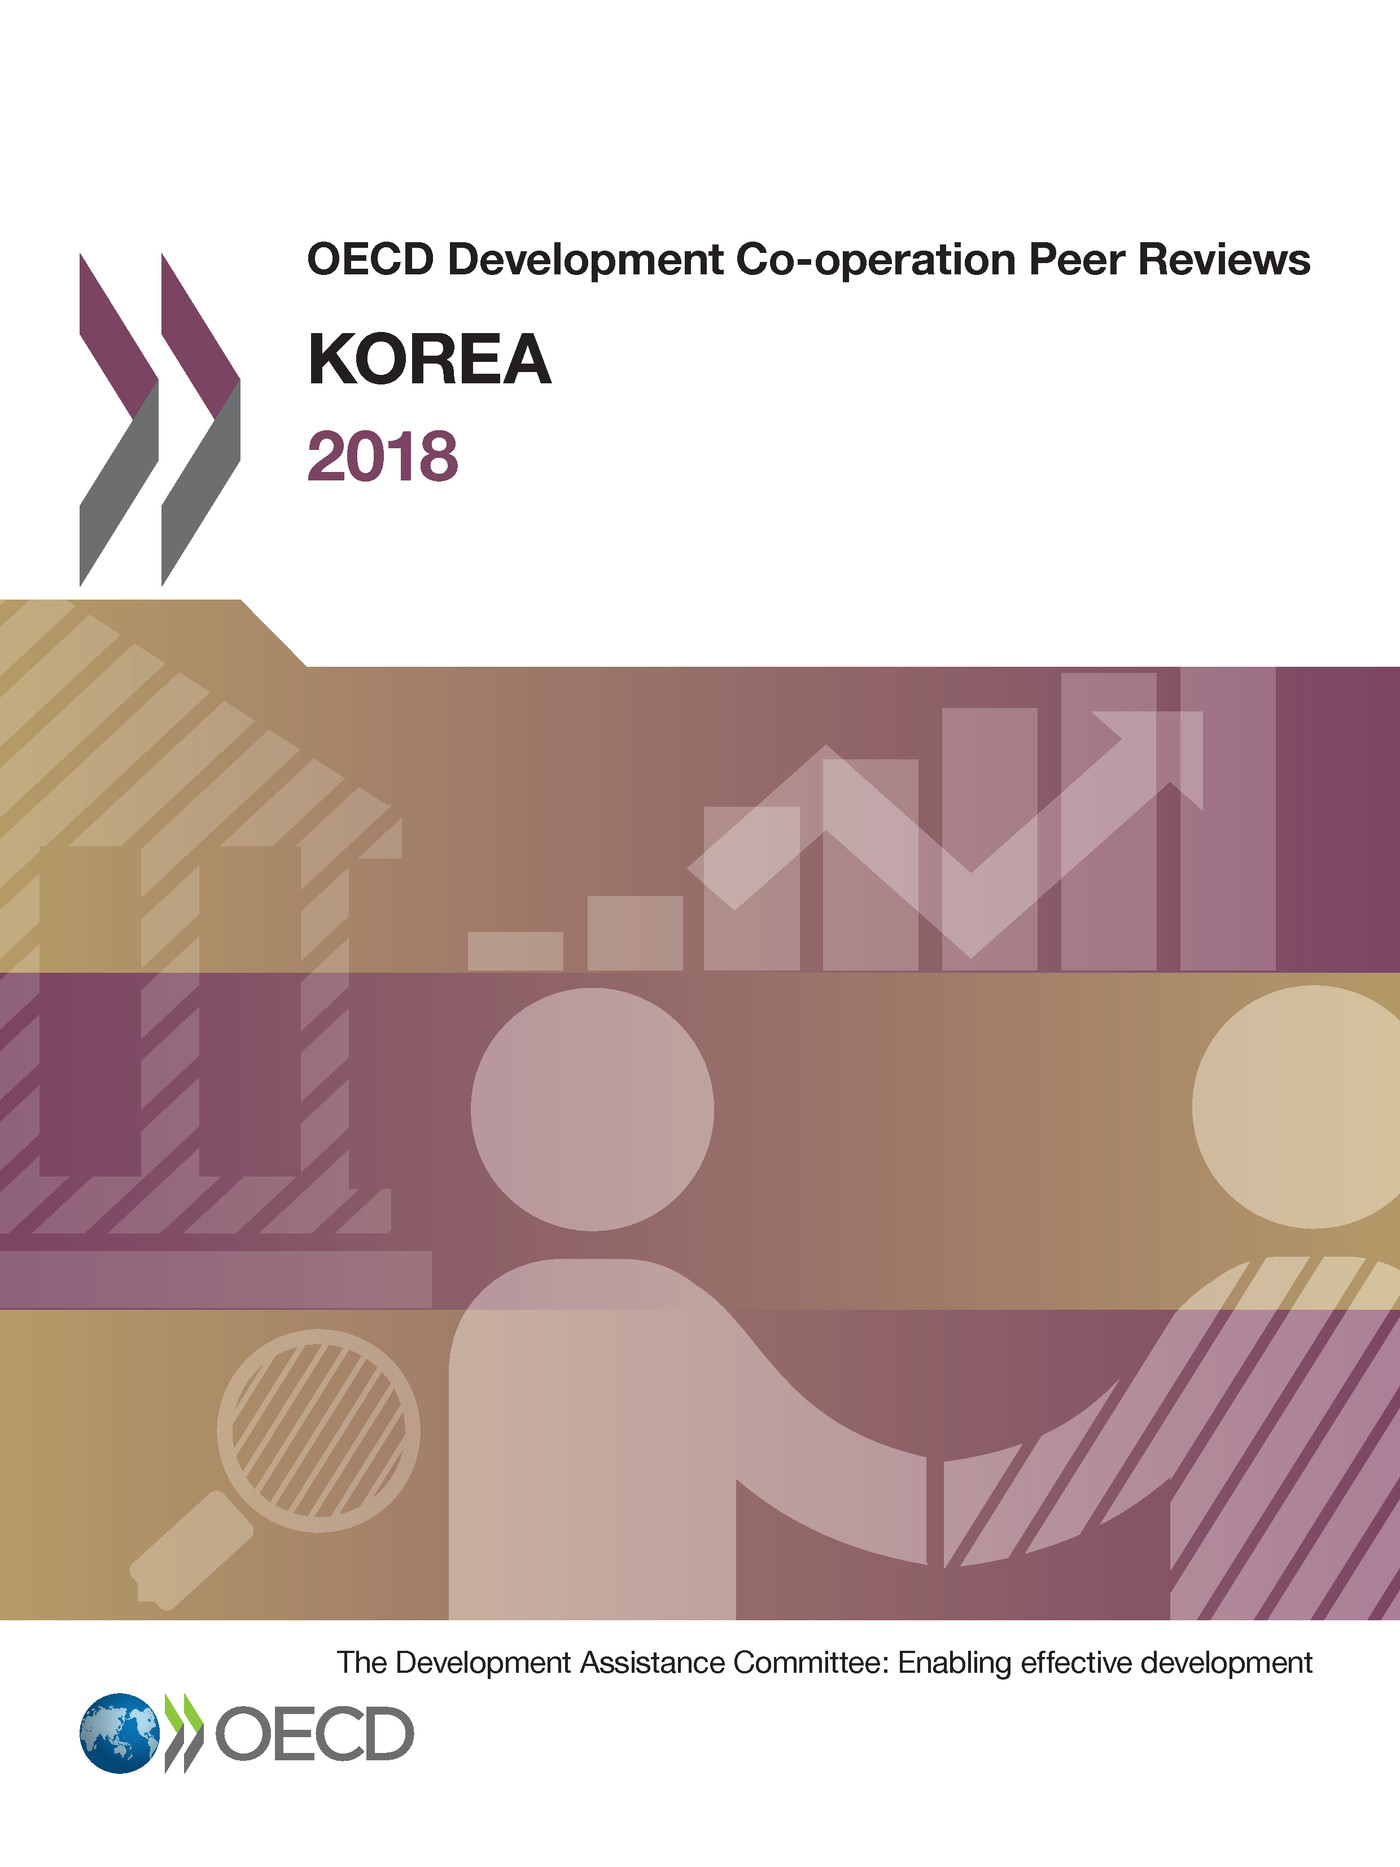 OECD Development Co-operation Peer Reviews: Korea 2018 -  Collectif - OCDE / OECD